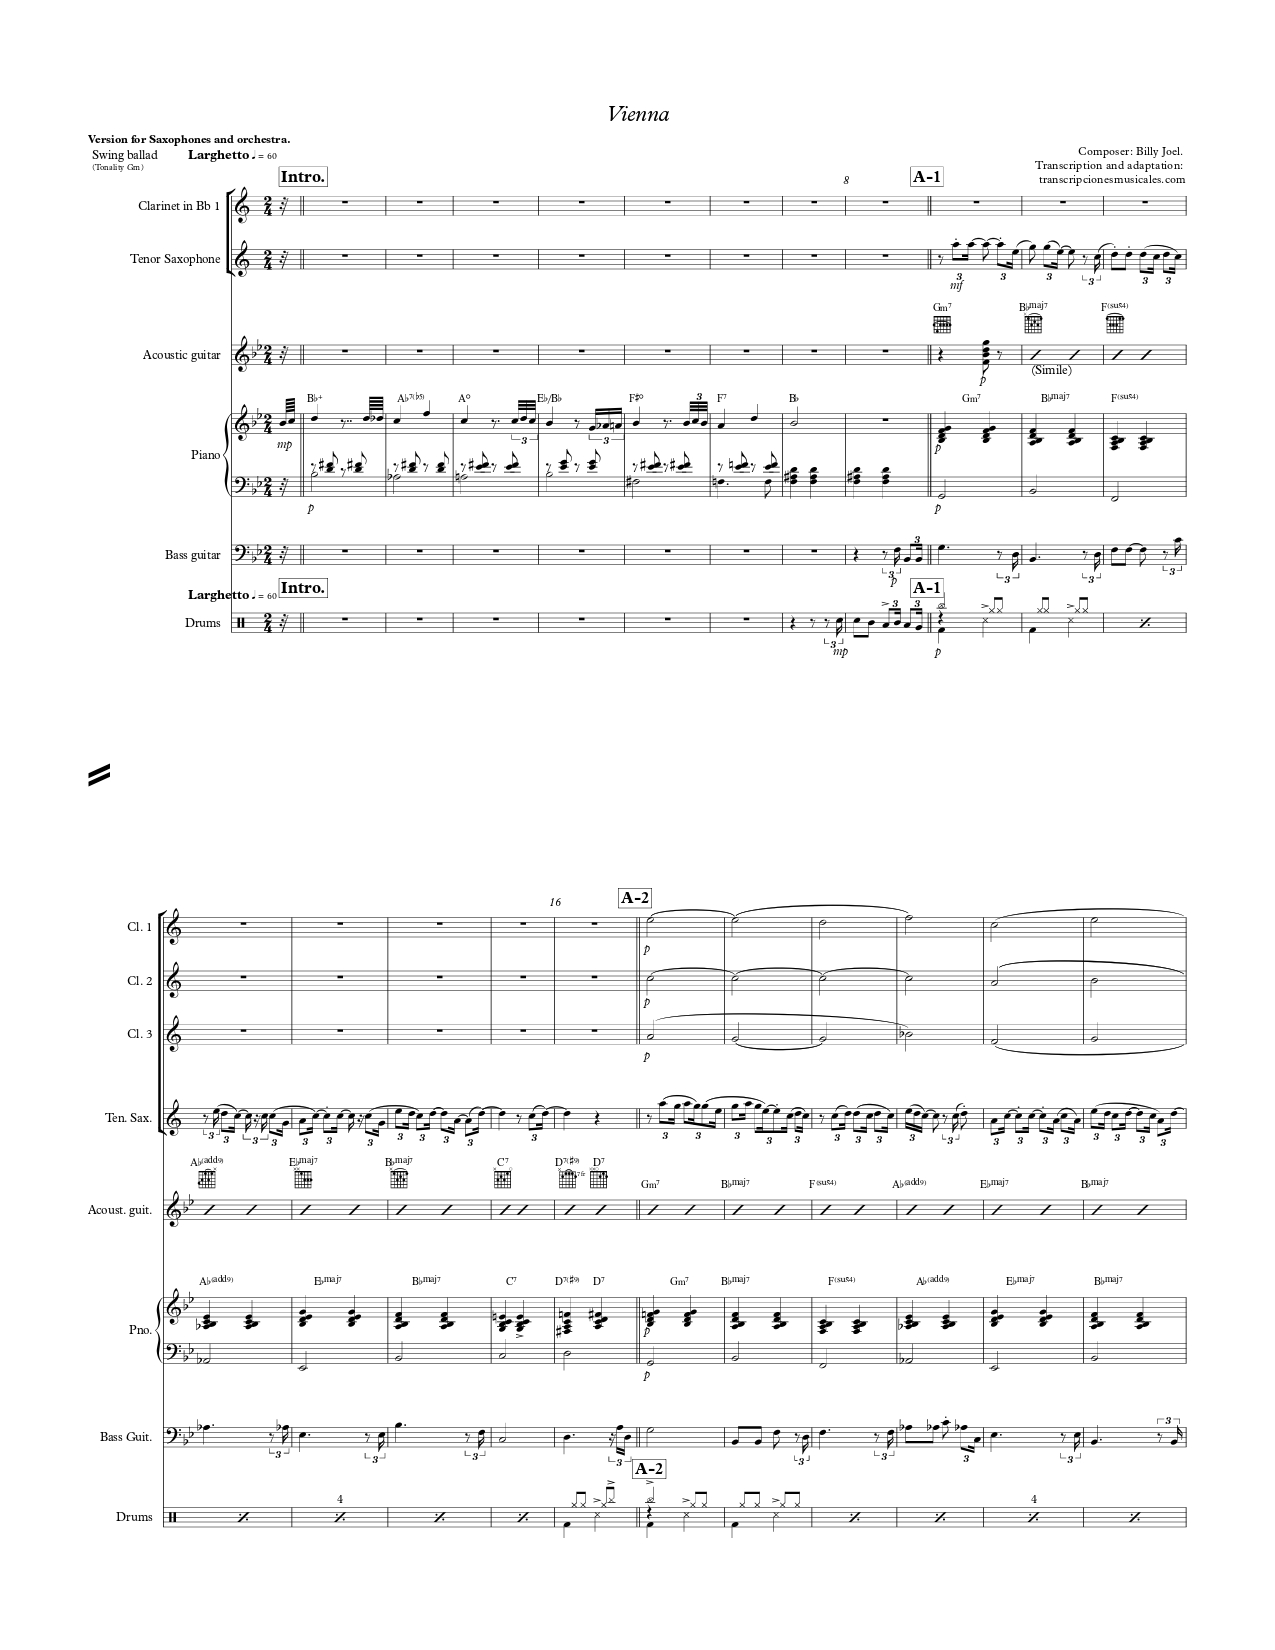 Vienna - sheet music page 1